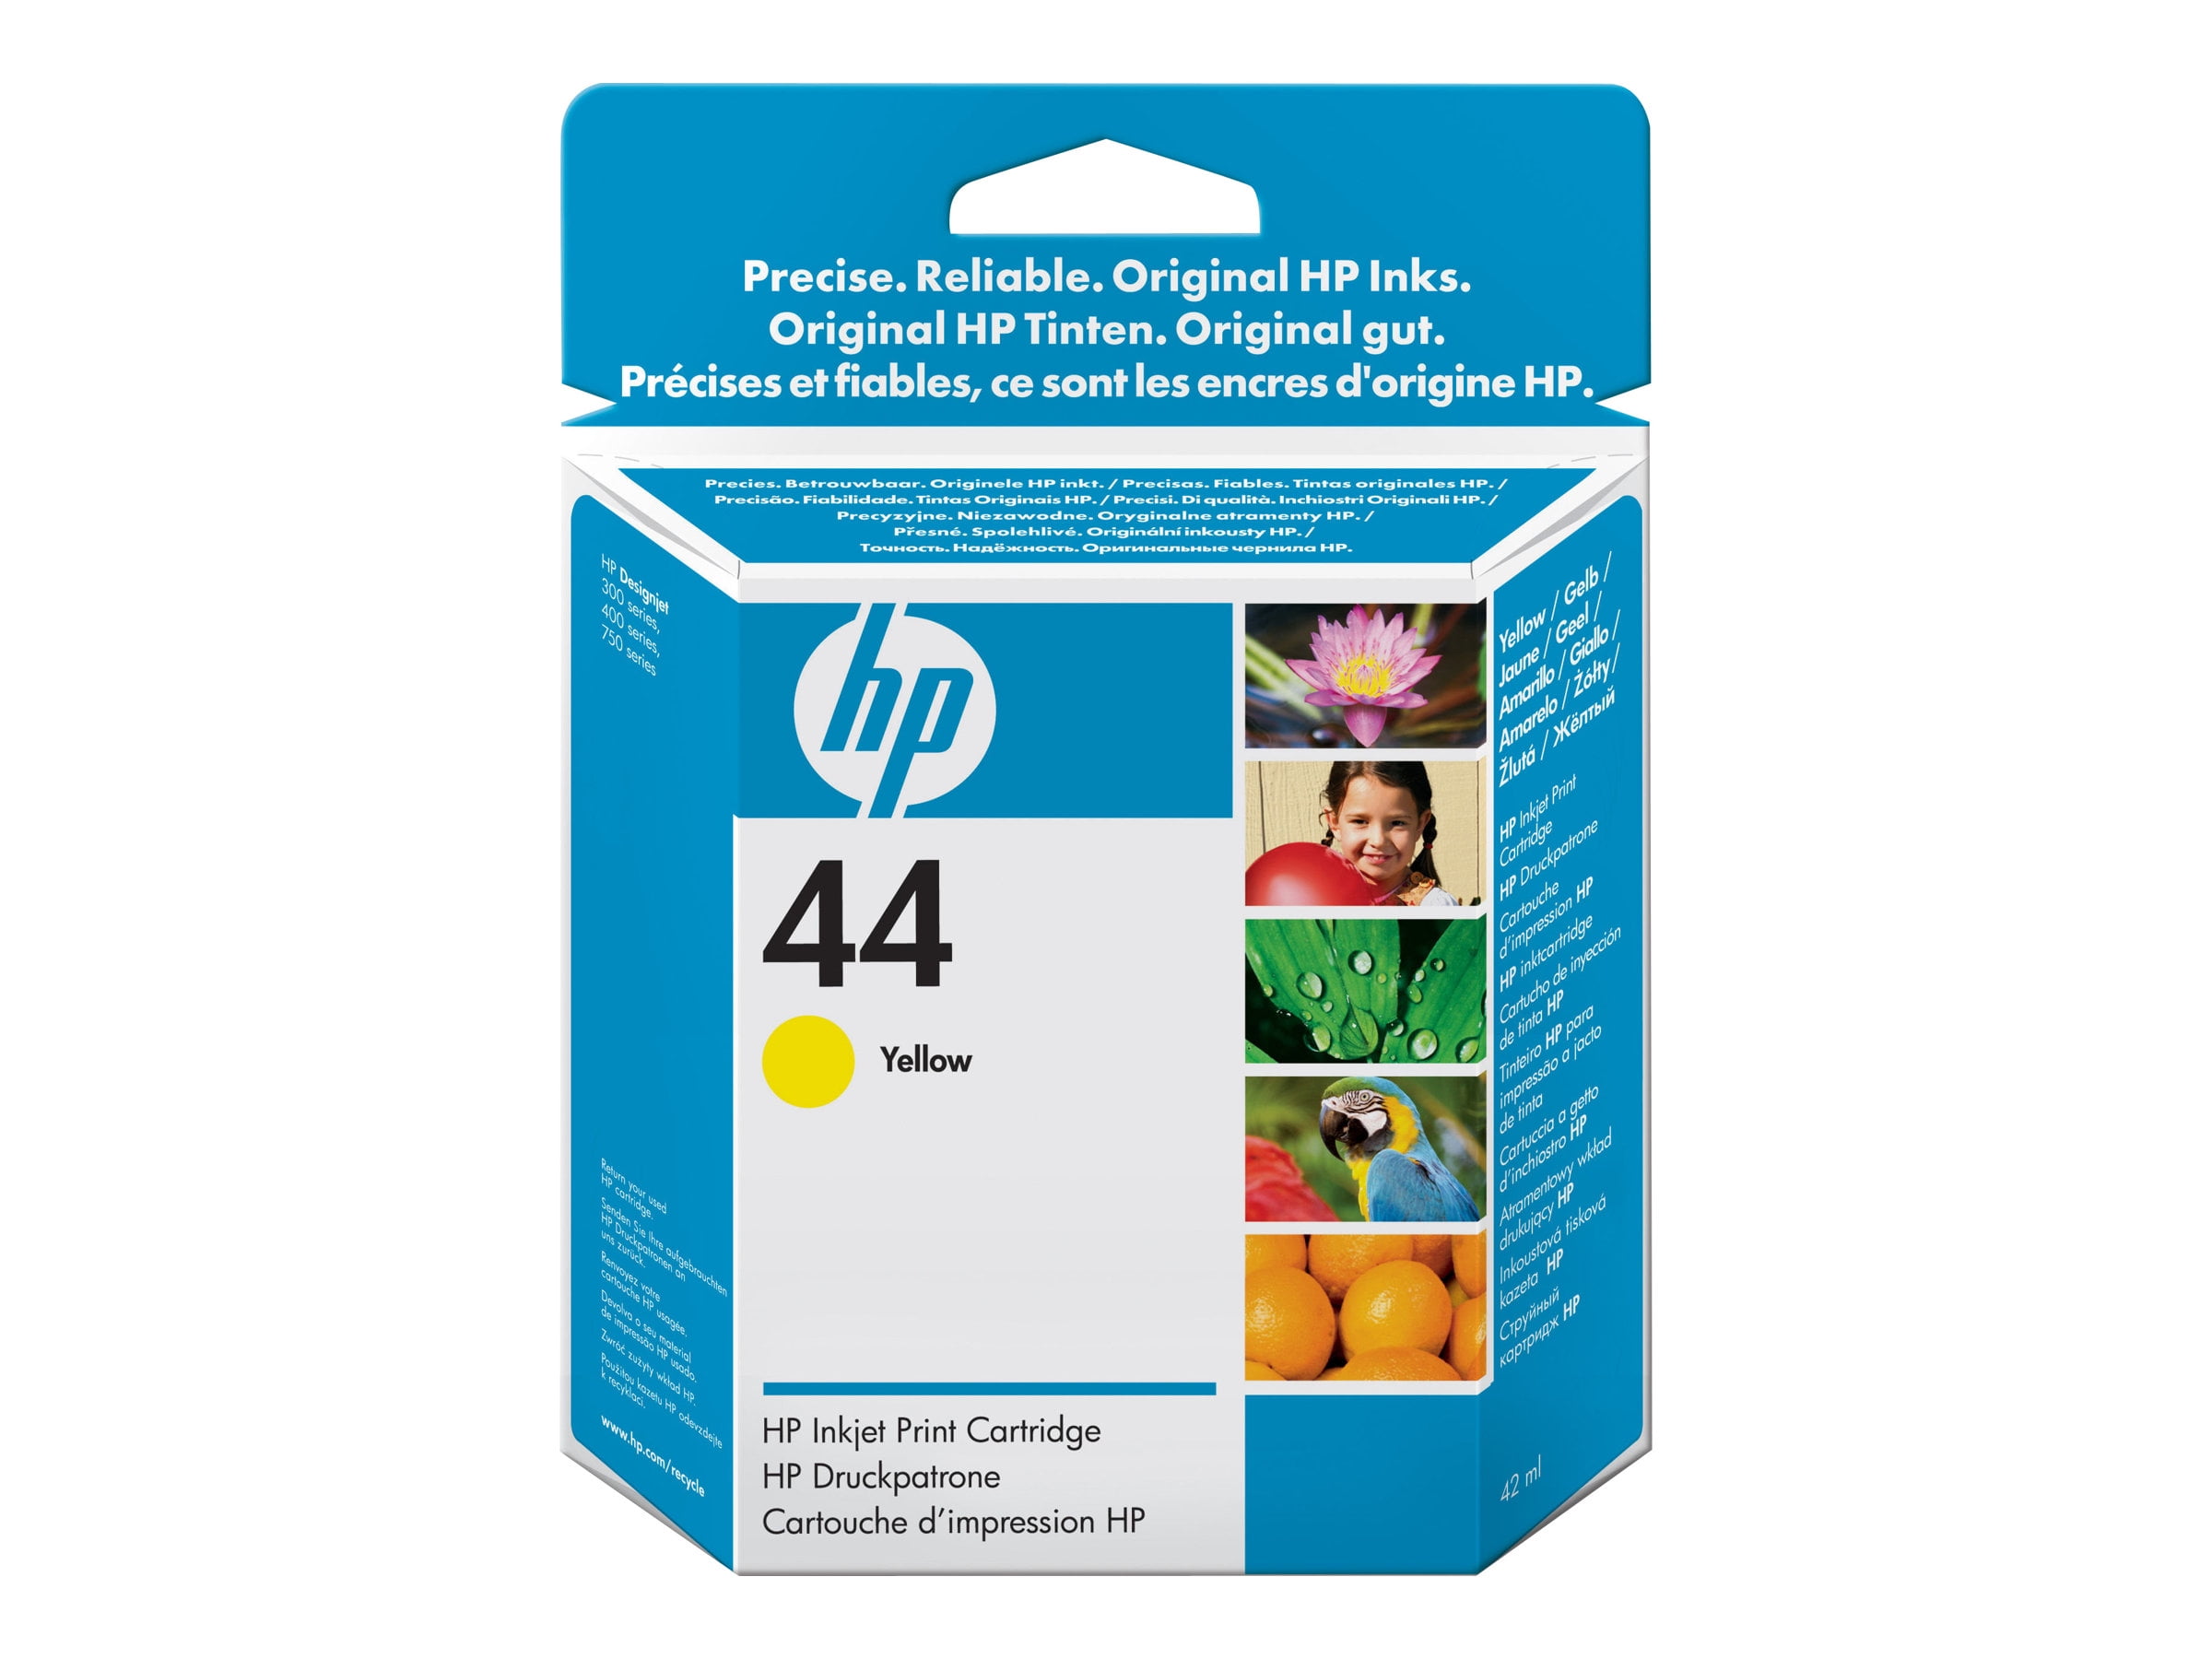 HP DESIGNJET 430 SD YLD YELLOW INK, 410 - Walmart.com